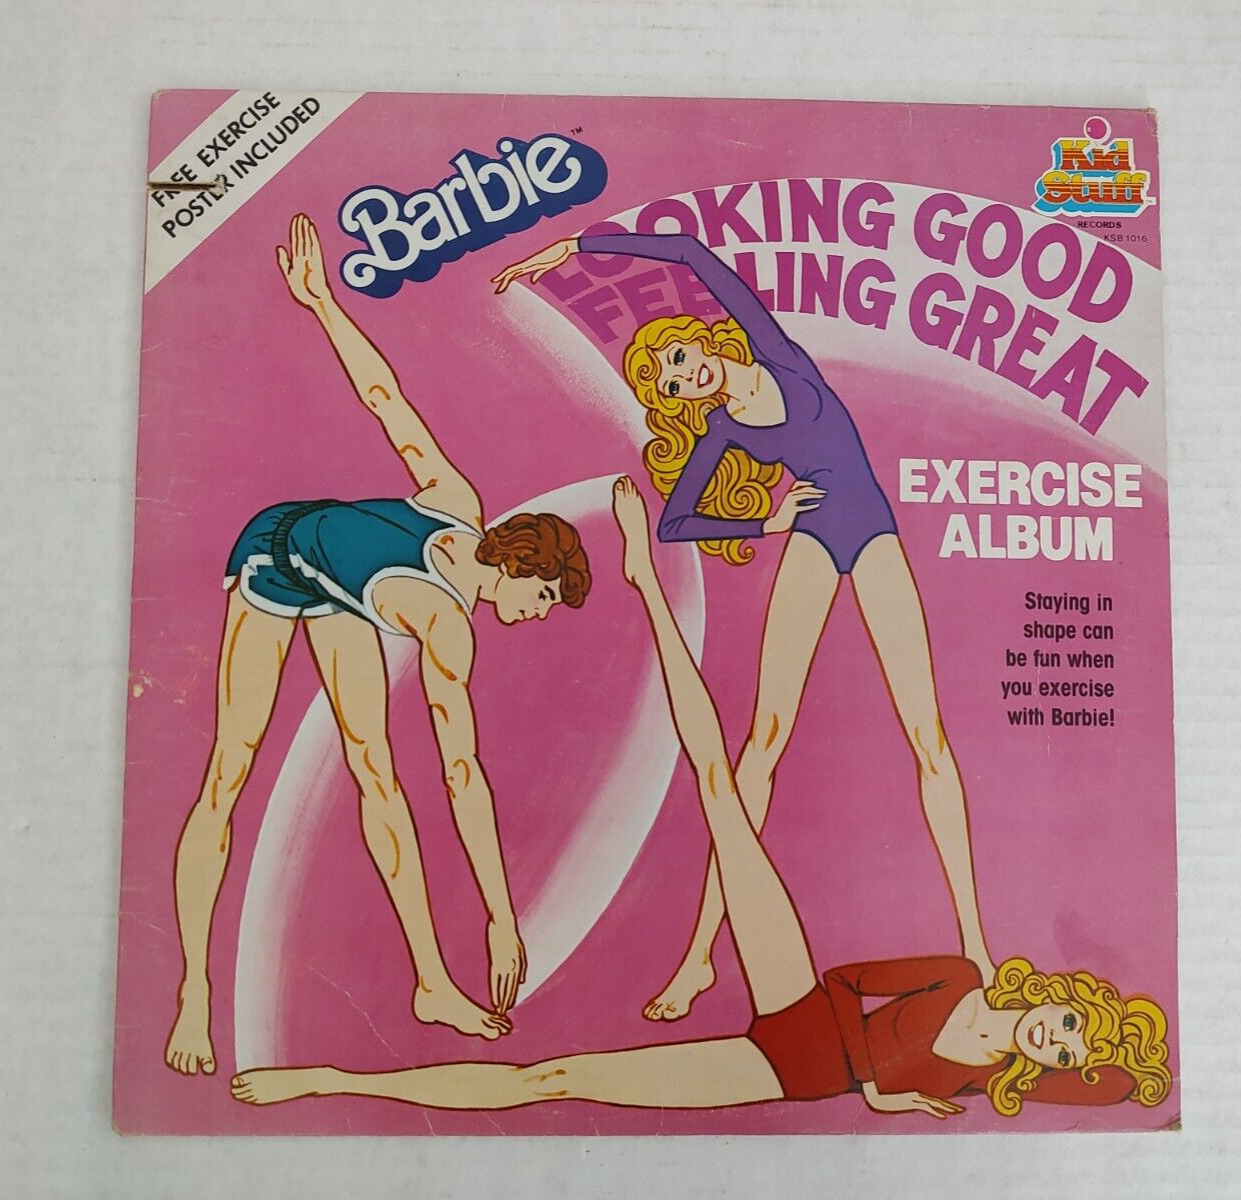 Barbie 1982 Exercise Album Looking Good Feeling Great LP Vinyl Record Kid Stuff